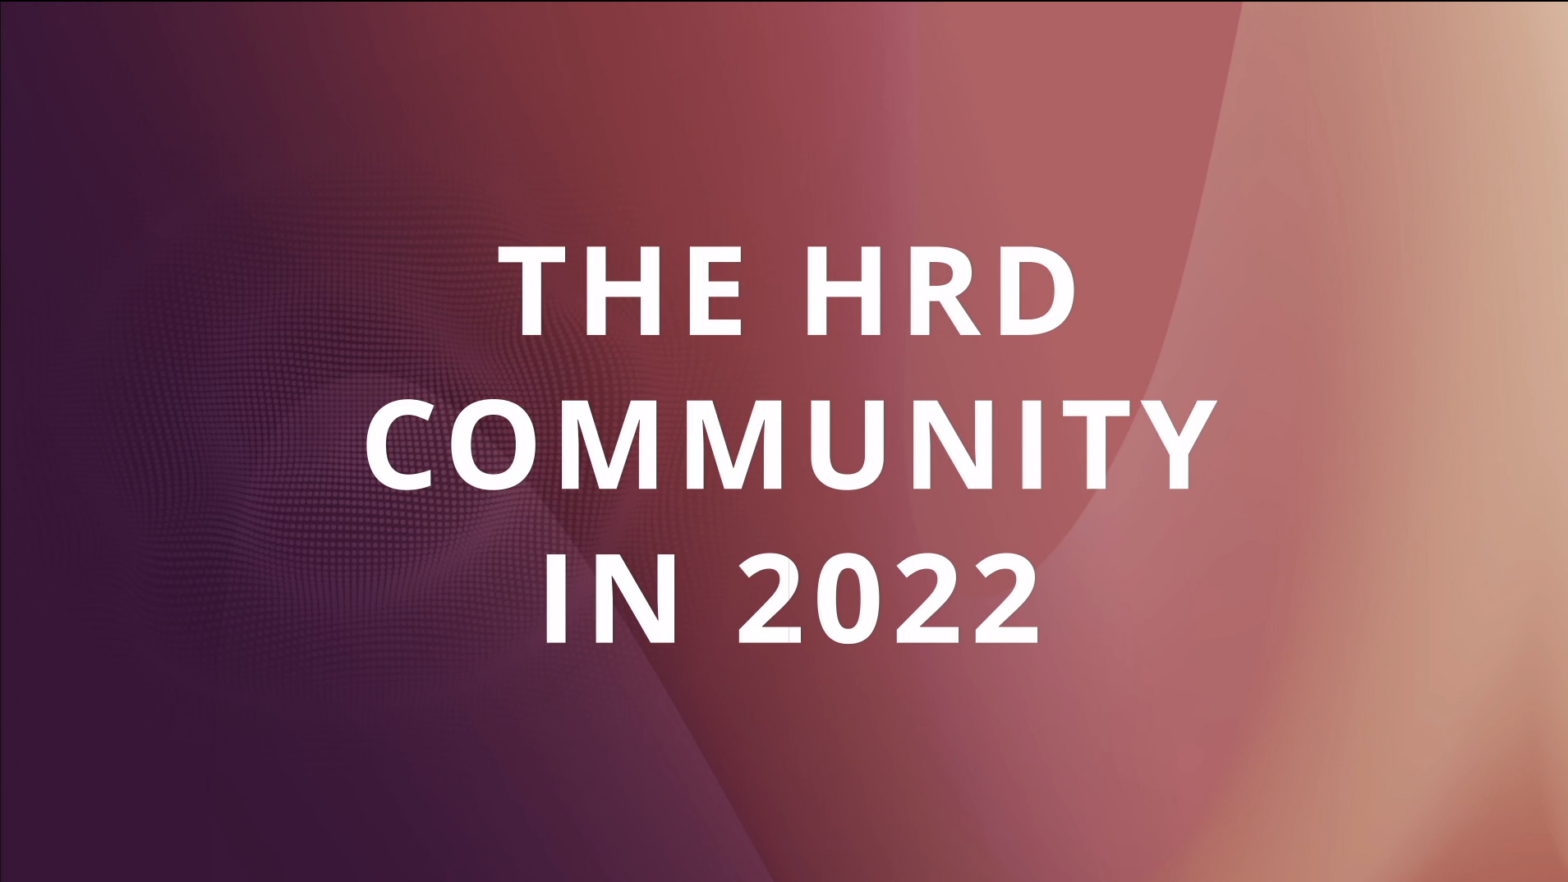 The HRD Community